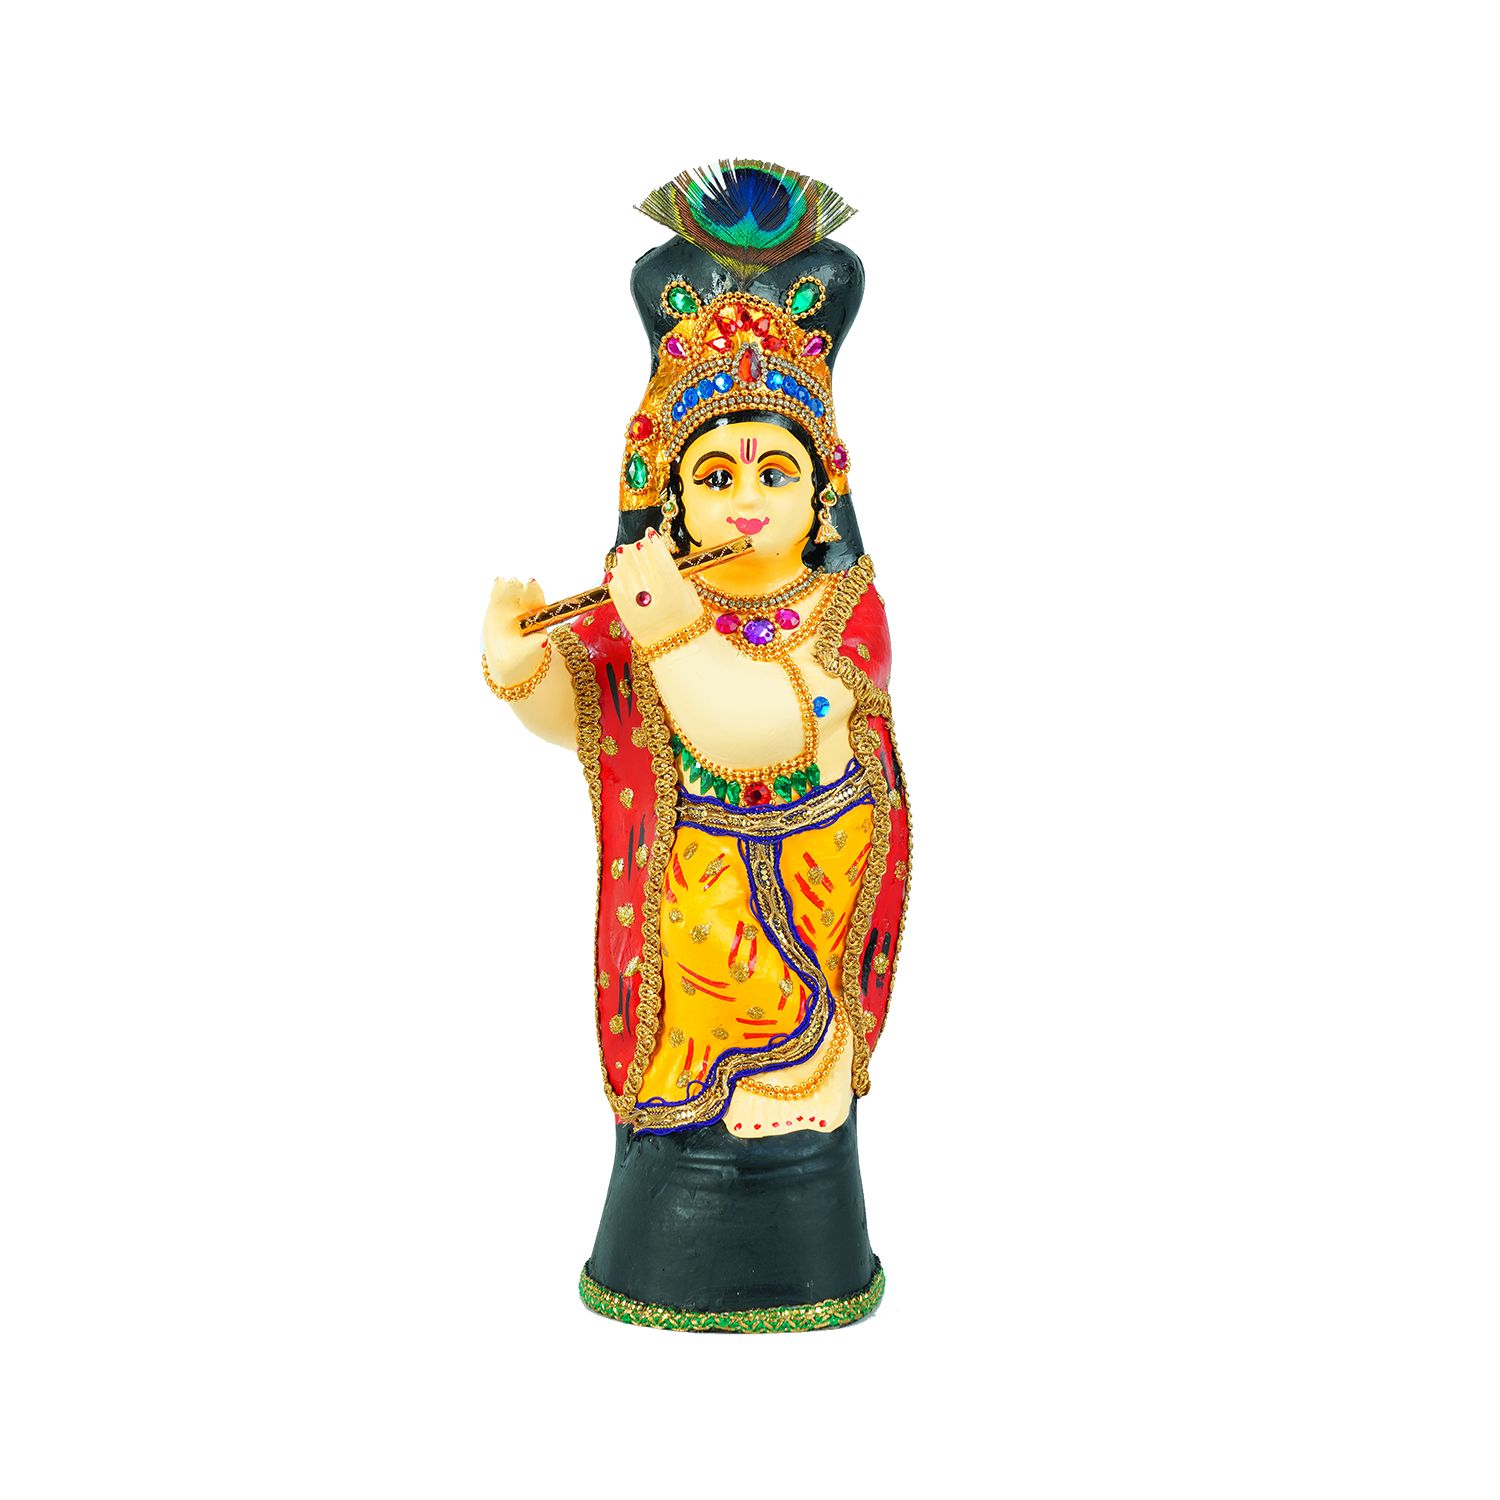 Idolmaker brings you an beautiful Idolmaker krishna for pooja room